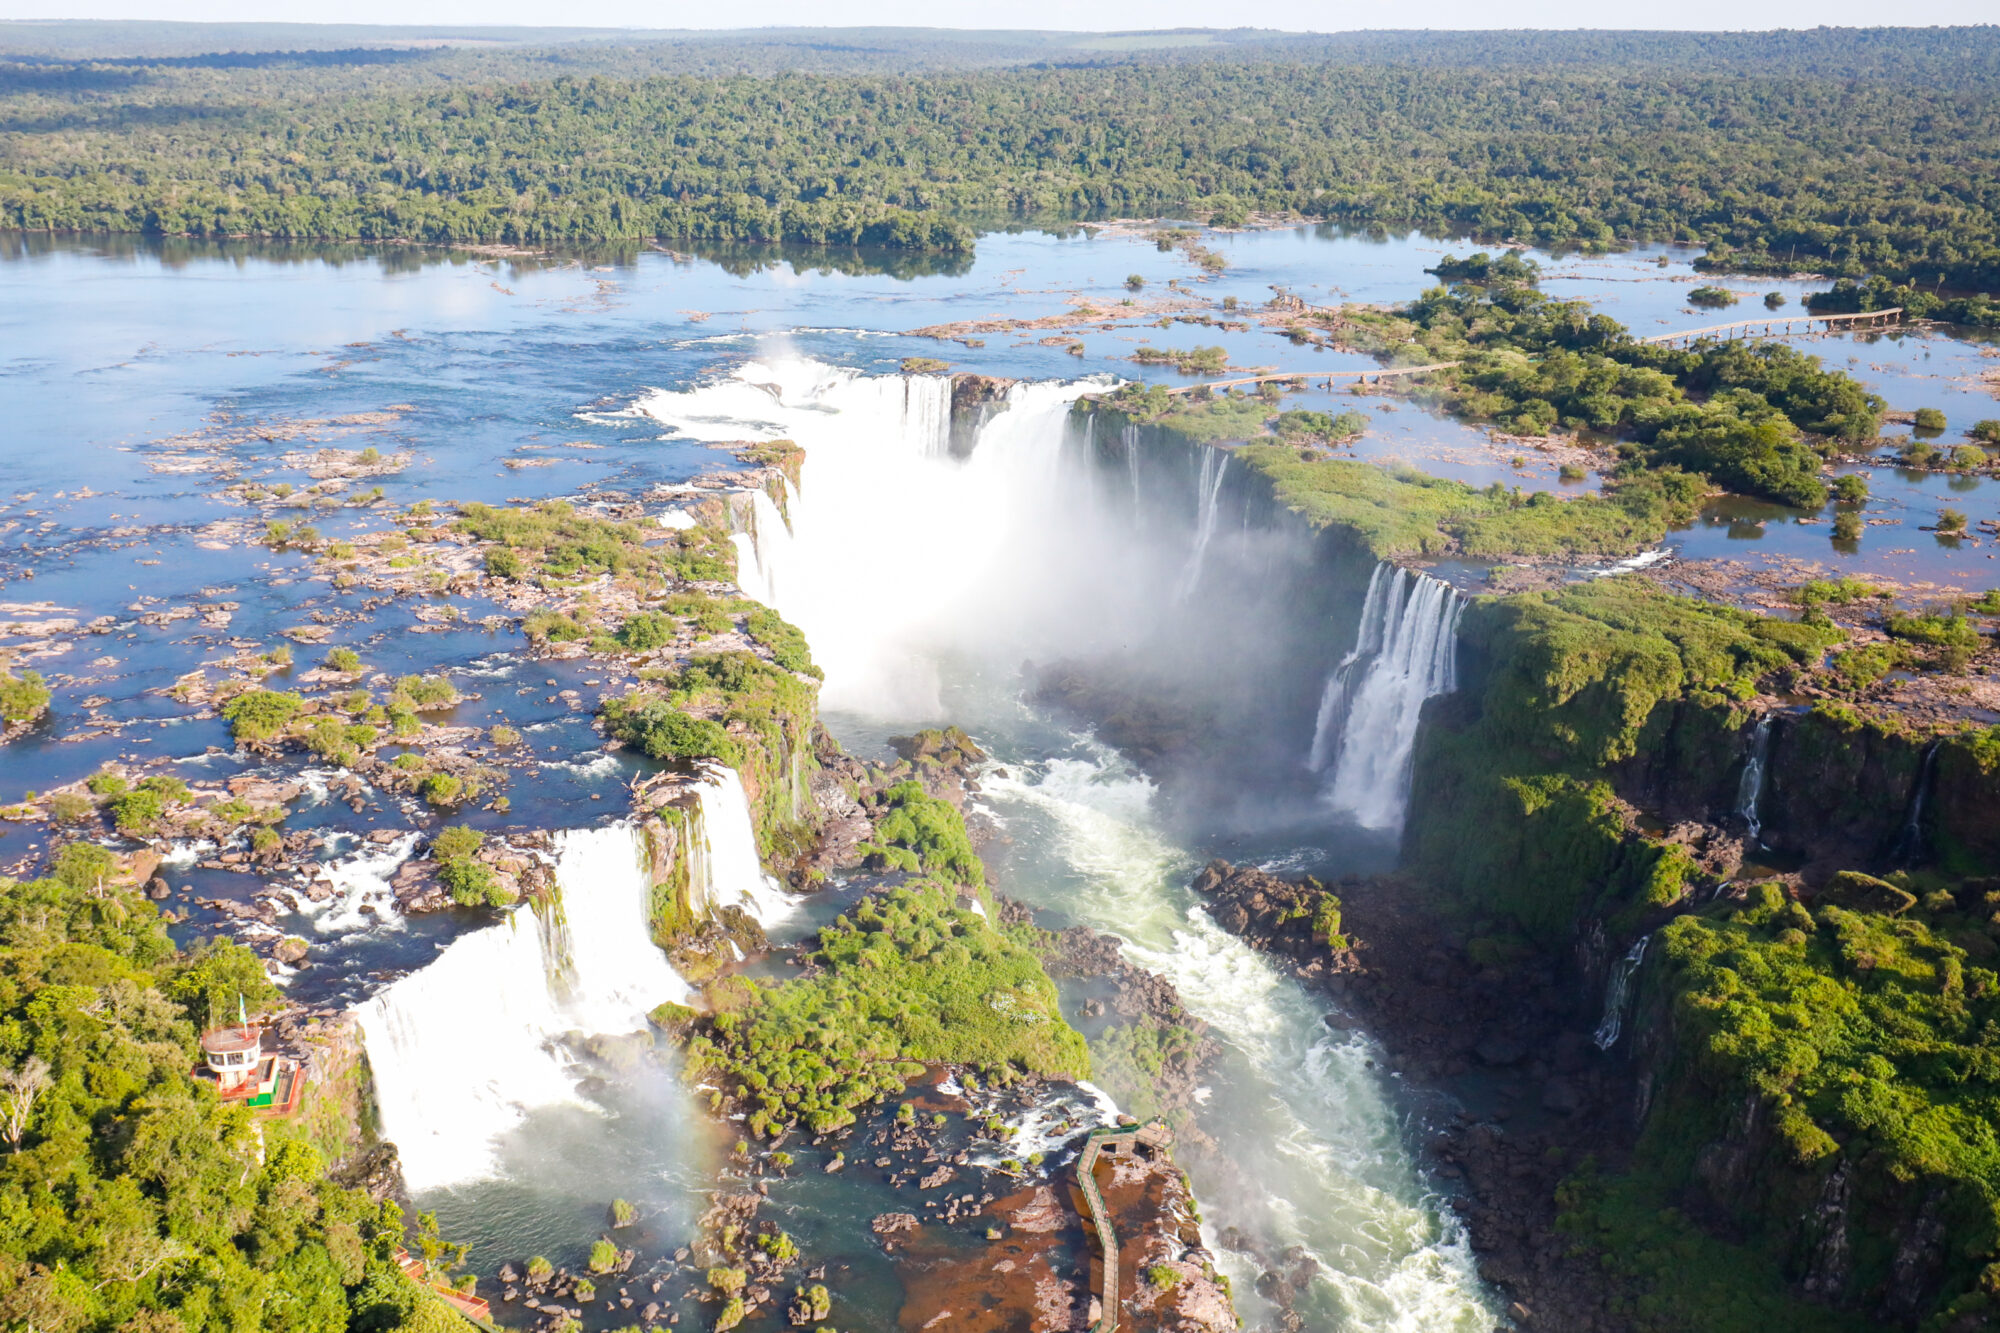 <p>Las cataratas del Iguazú, en la frontera entre Brasil y Argentina. Ambos comparten frontera con Paraguay en la confluencia de los ríos Iguazú y Paraná, y ahora unen esfuerzos para coordinar los recursos hídricos compartidos (Imagen: <a href="https://www.flickr.com/photos/palaciodoplanalto/51101909873/in/photolist-2kRGDrB-2kRM5dj-2n51EuC-2kRM5g5-2kRFpuJ-2kRFpz8-2n4VgLq-2kRFaBw-2kRM5hN-2n52YYa-2kRFUBh-2n51Hdi-2kRFUx4-2n51GP2-2kRM5ij-2n54yAe-2kRGDyW-2n51Fkk-2n51FDg-2onstxV-2n52WLz-2onxkfW-2n52XED-2n54z5f-2onstBs-2n52YLB-2n4VgBs-2kRFUzU-2kRFpws-2kRDNtd-2kRJwzU-2kRF5Us-2kREdRe-2kREKMQ-2kRG1x1-2n52Z69-2n52YxW-2kREdPA-2kREdM6-2ifsoUo-2kRLKEs-2kRLr8n-2kREL53-2kREL2s-2kRG1bj-2kREiB9-2kREixm-2kREL4w-2kRDNwe-2kRJwwC/">Alan Santos</a> /<a href="https://www.flickr.com/people/palaciodoplanalto/">Palácio do Planalto</a>,<a href="https://creativecommons.org/licenses/by/2.0/"> CC BY</a>)</p>